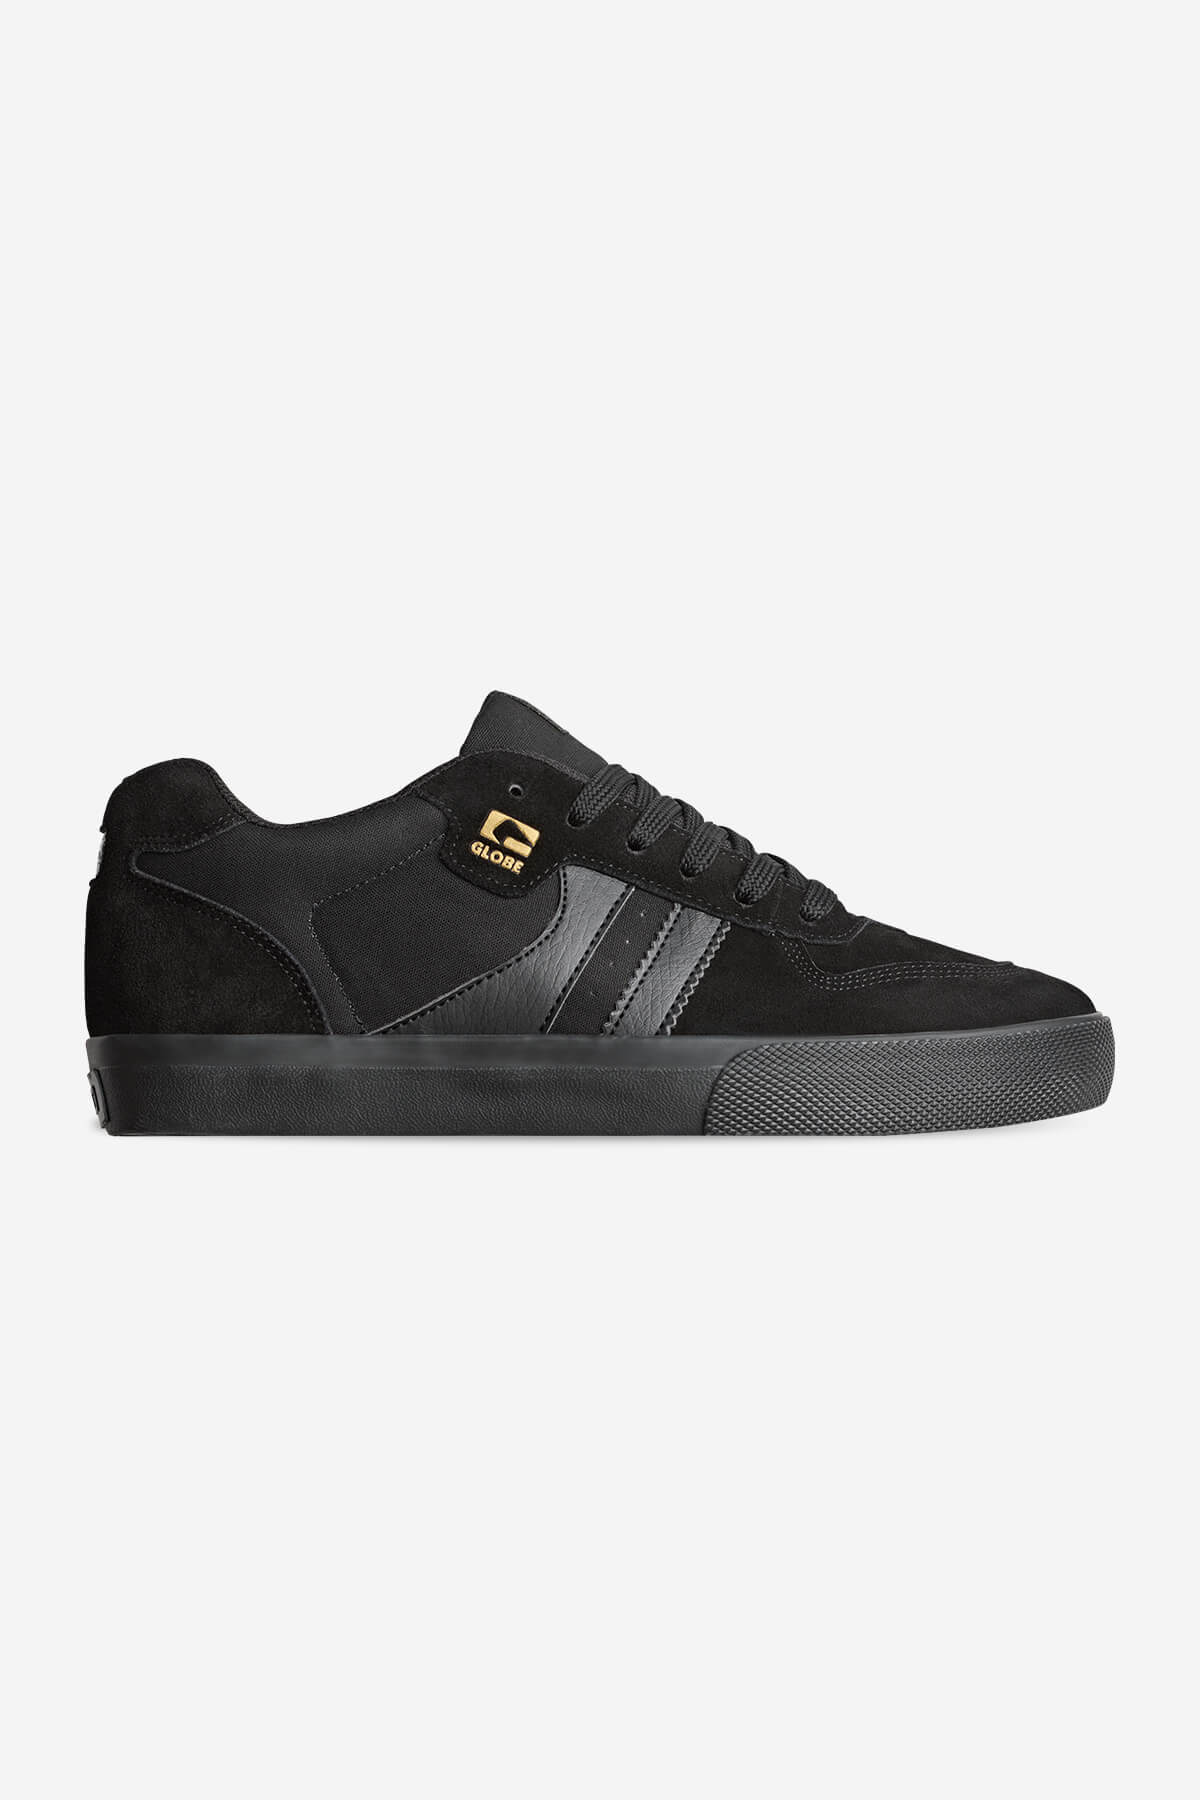 encore-2 black gold dip skate shoes